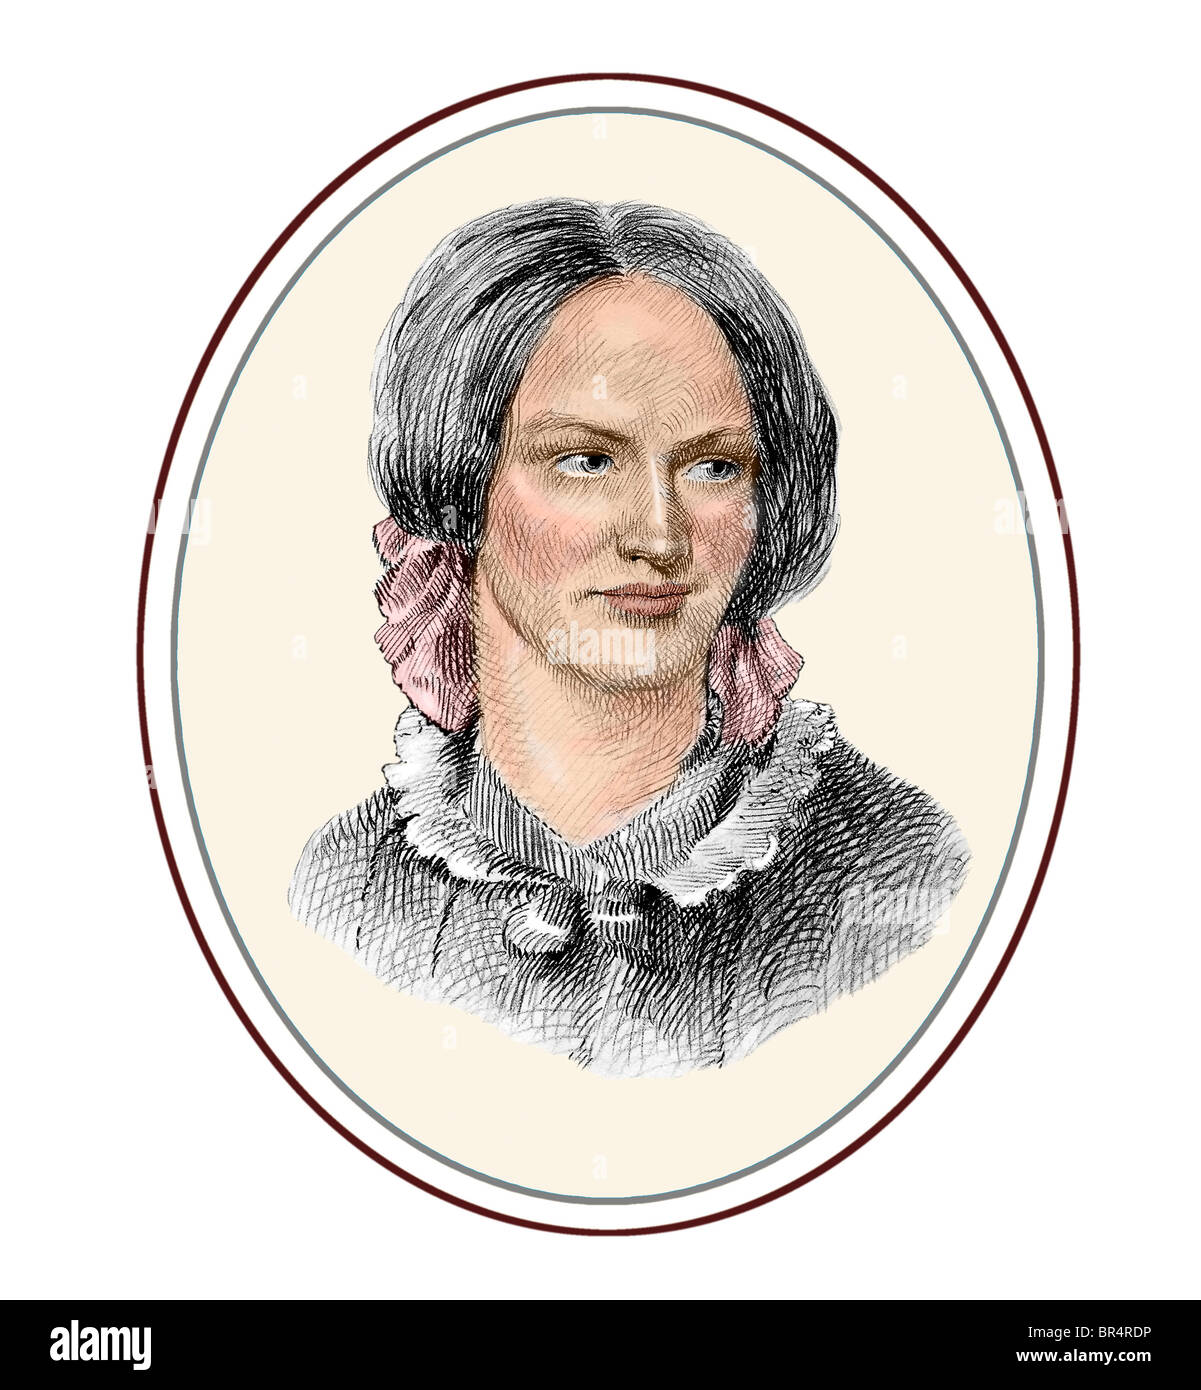 Charlotte Bronte portrait Stock Vector